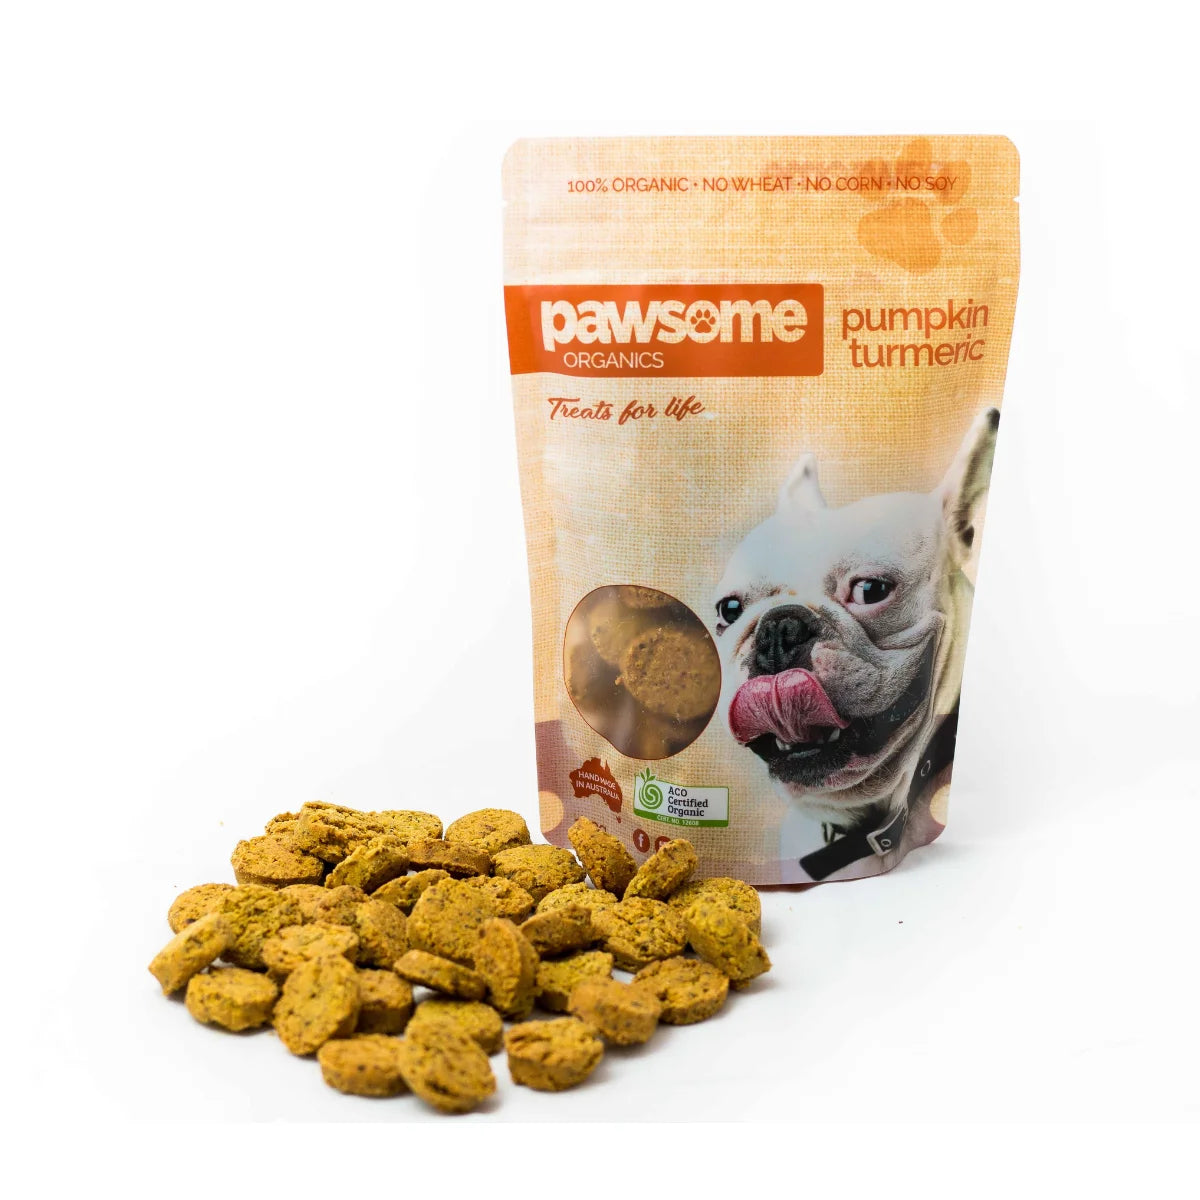 Pawsome Organic Pumpkin & Turmeric Dog Treats 200g